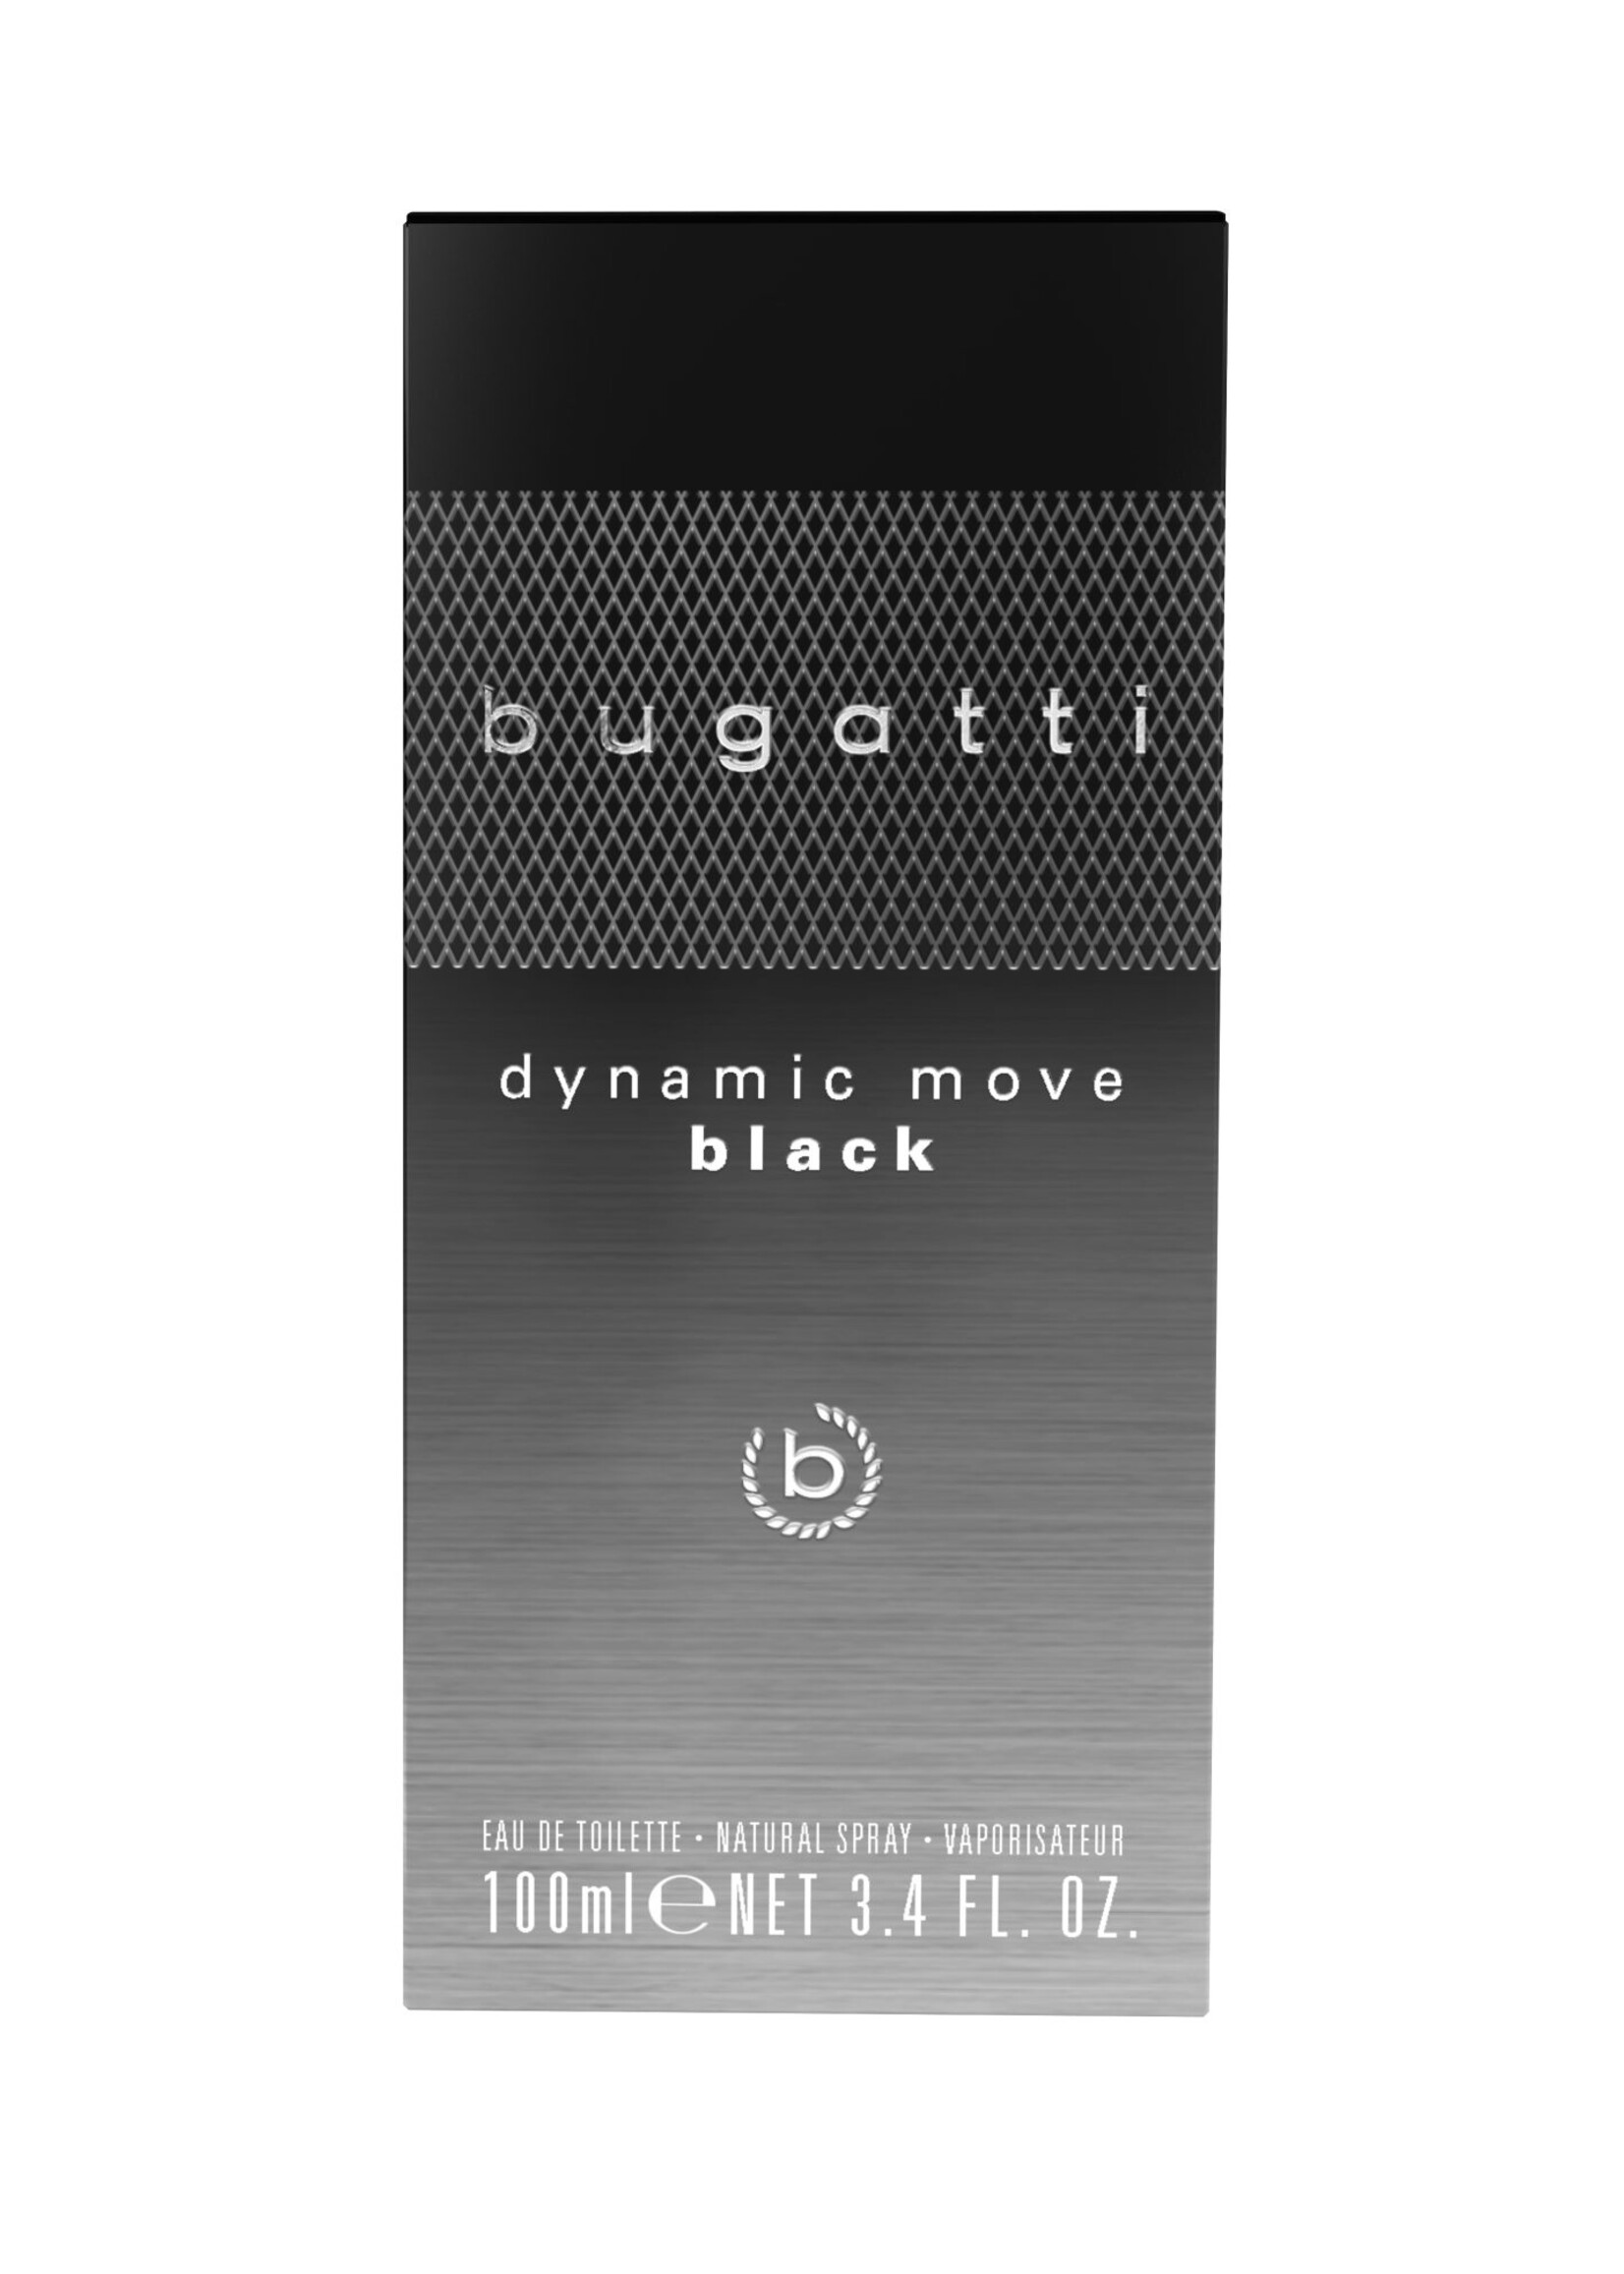 Bugatti Dynamic Move Black